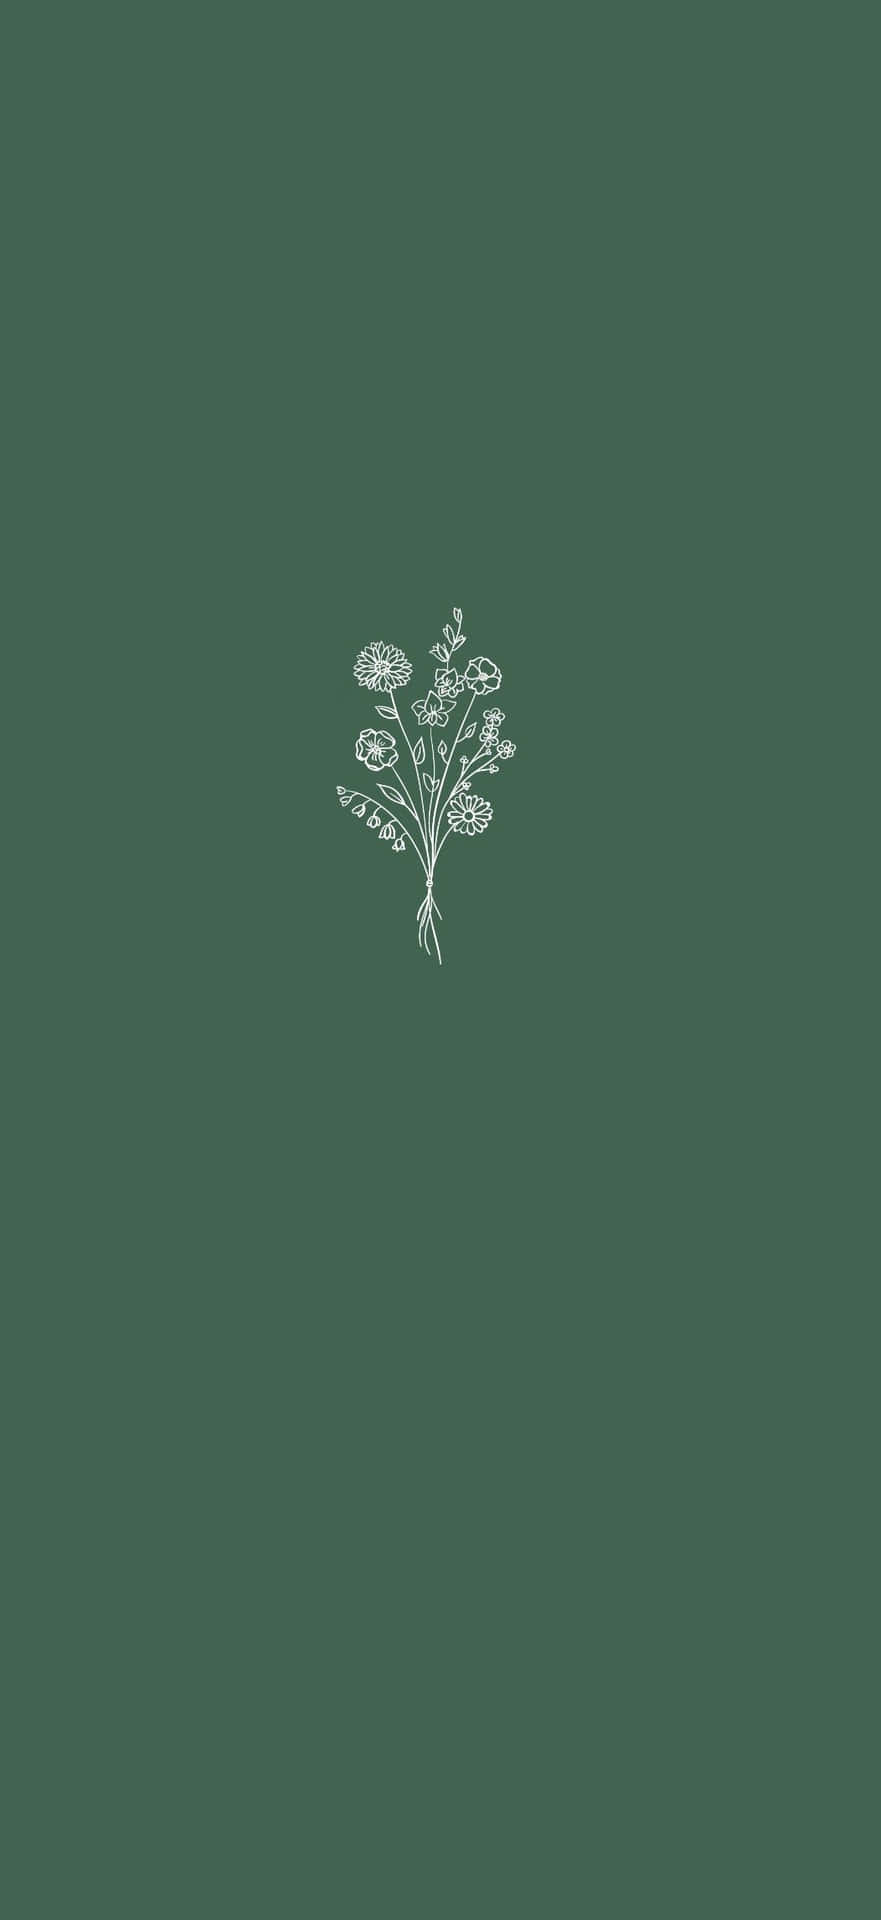 Aesthetic Green Minimal Bouquet Of Flowers Wallpaper